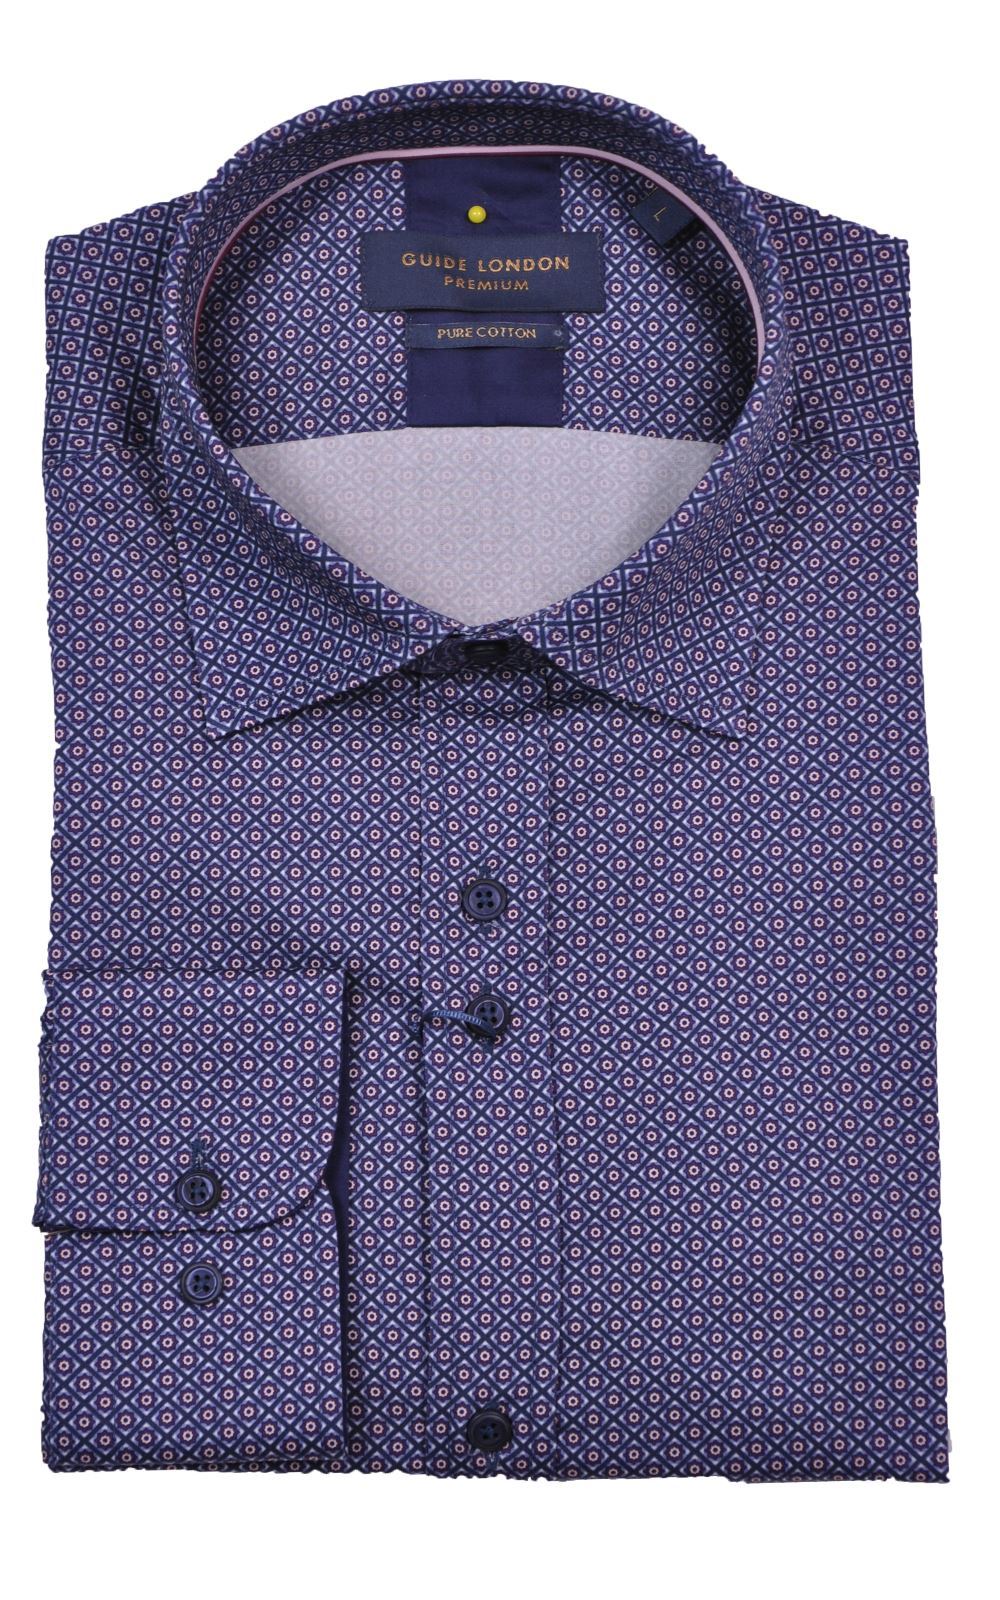 S&T Moore. Guide London Long Sleeve Shirt LS76359